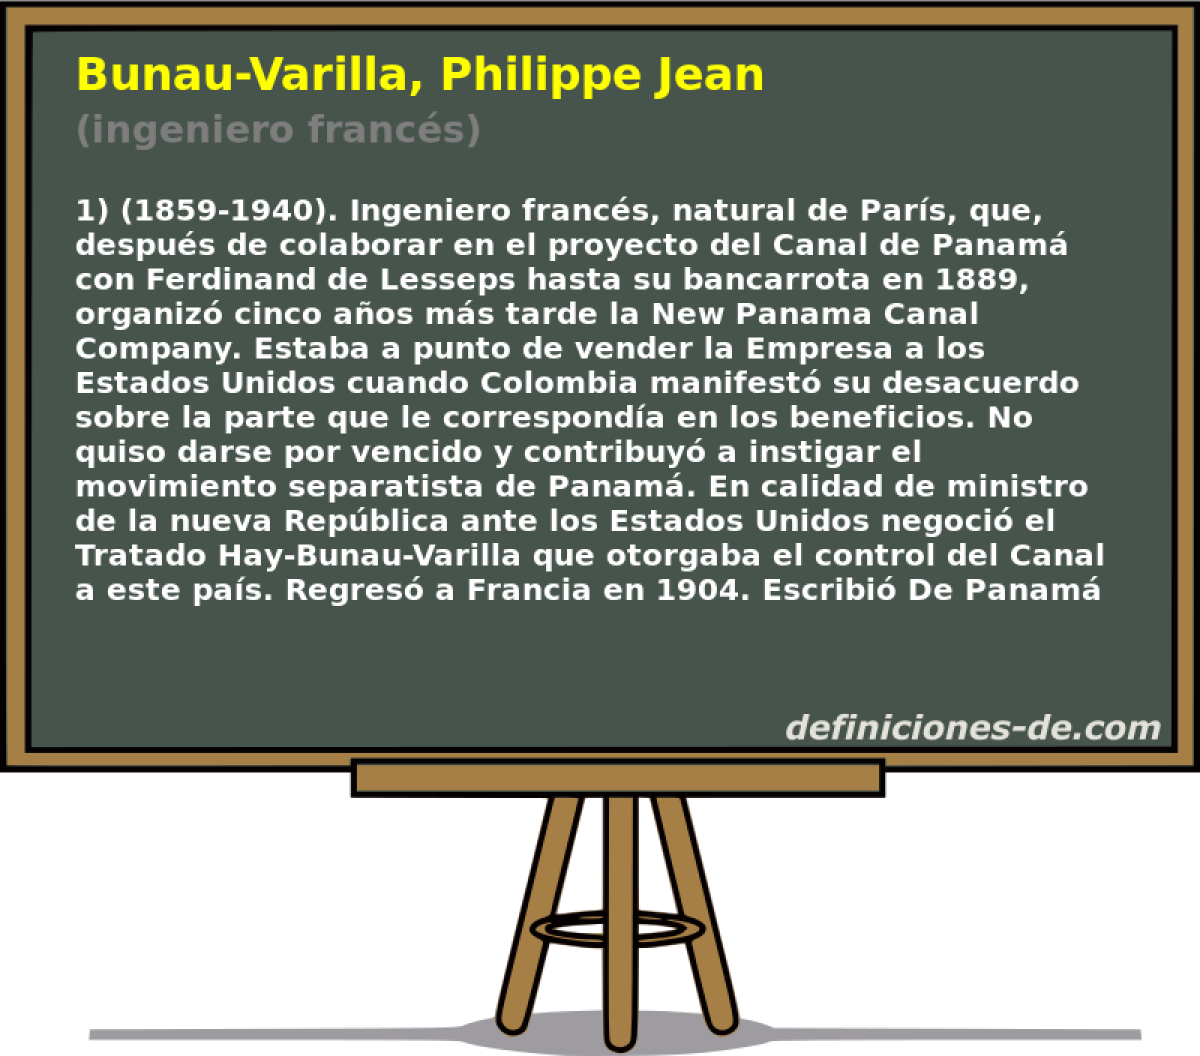 Bunau-Varilla, Philippe Jean (ingeniero francs)